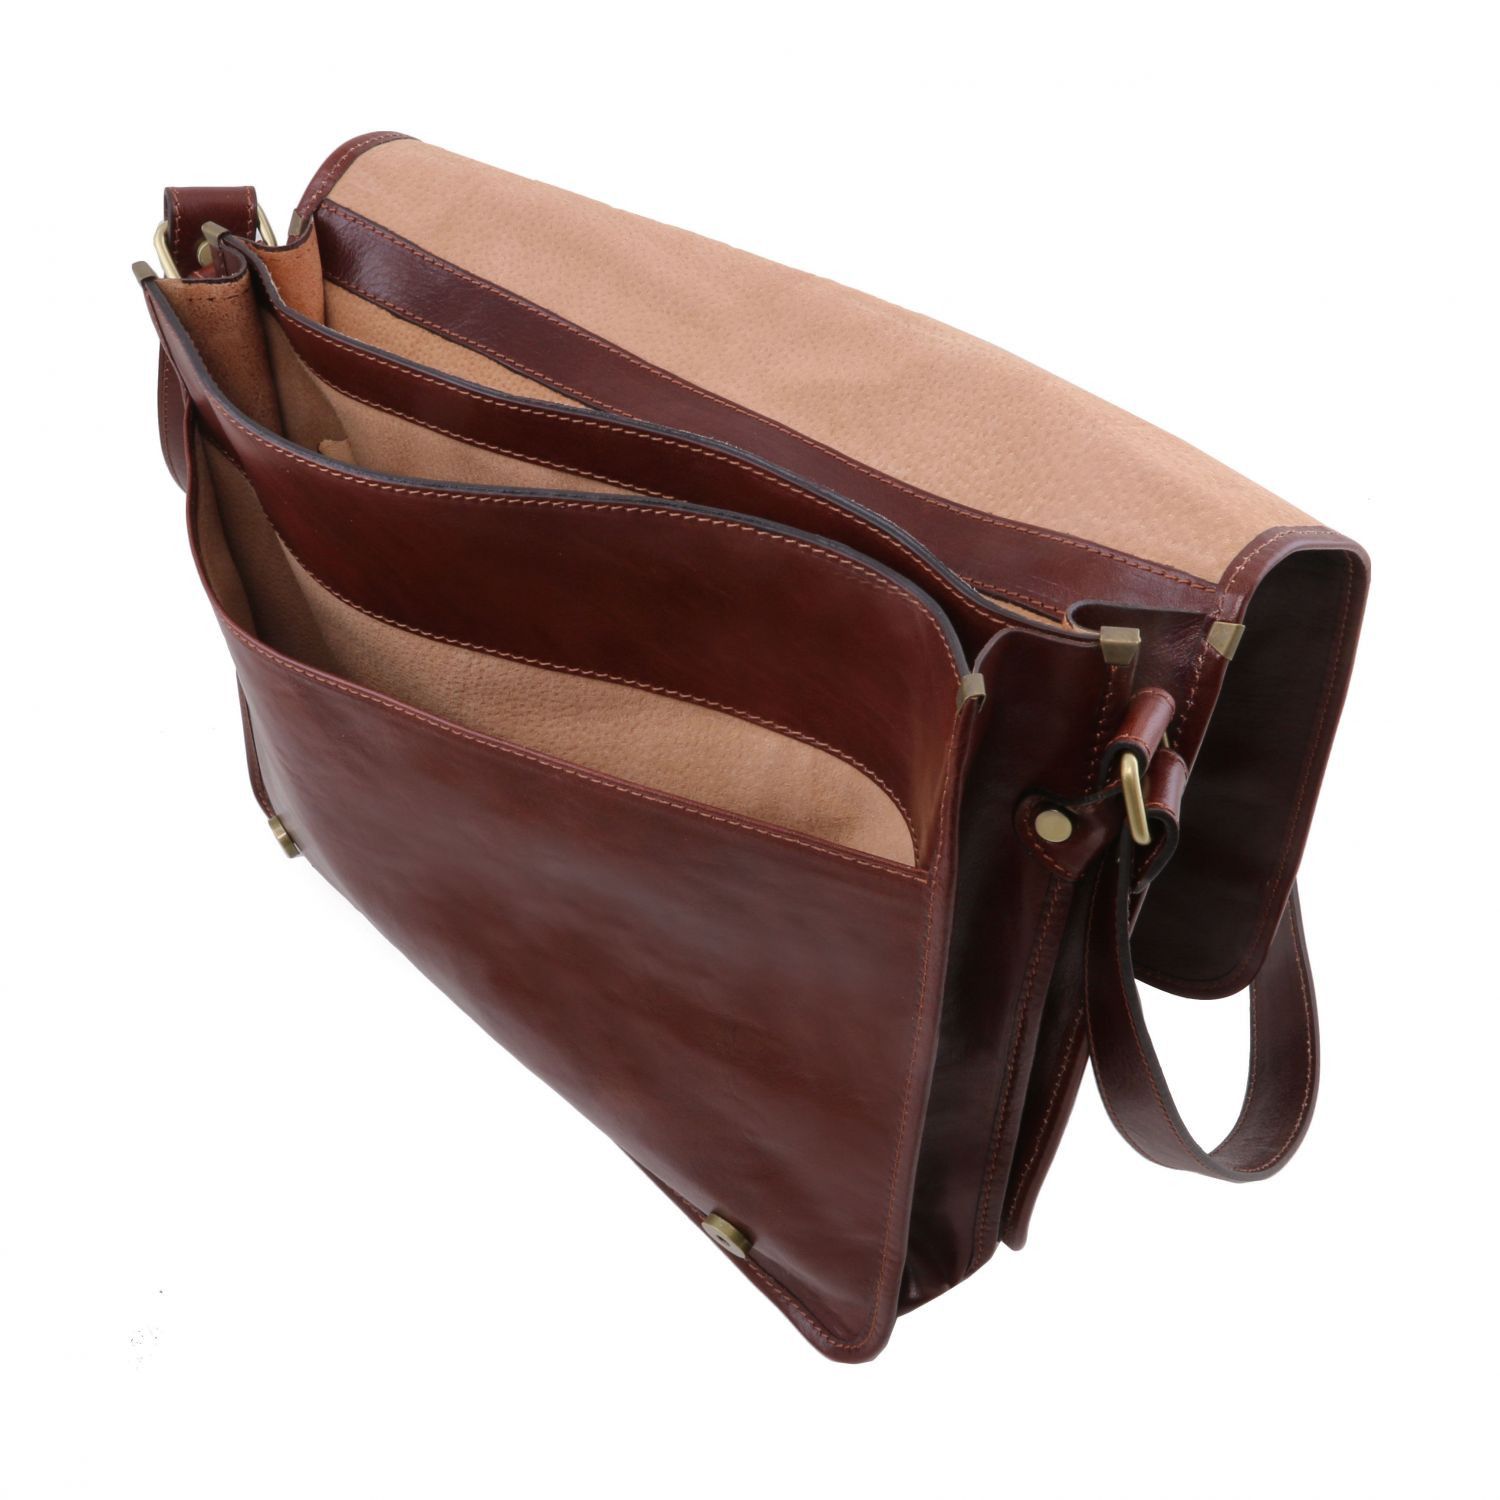 TL Messenger - Two Compartments Leather Shoulder bag - Large Size Black ...